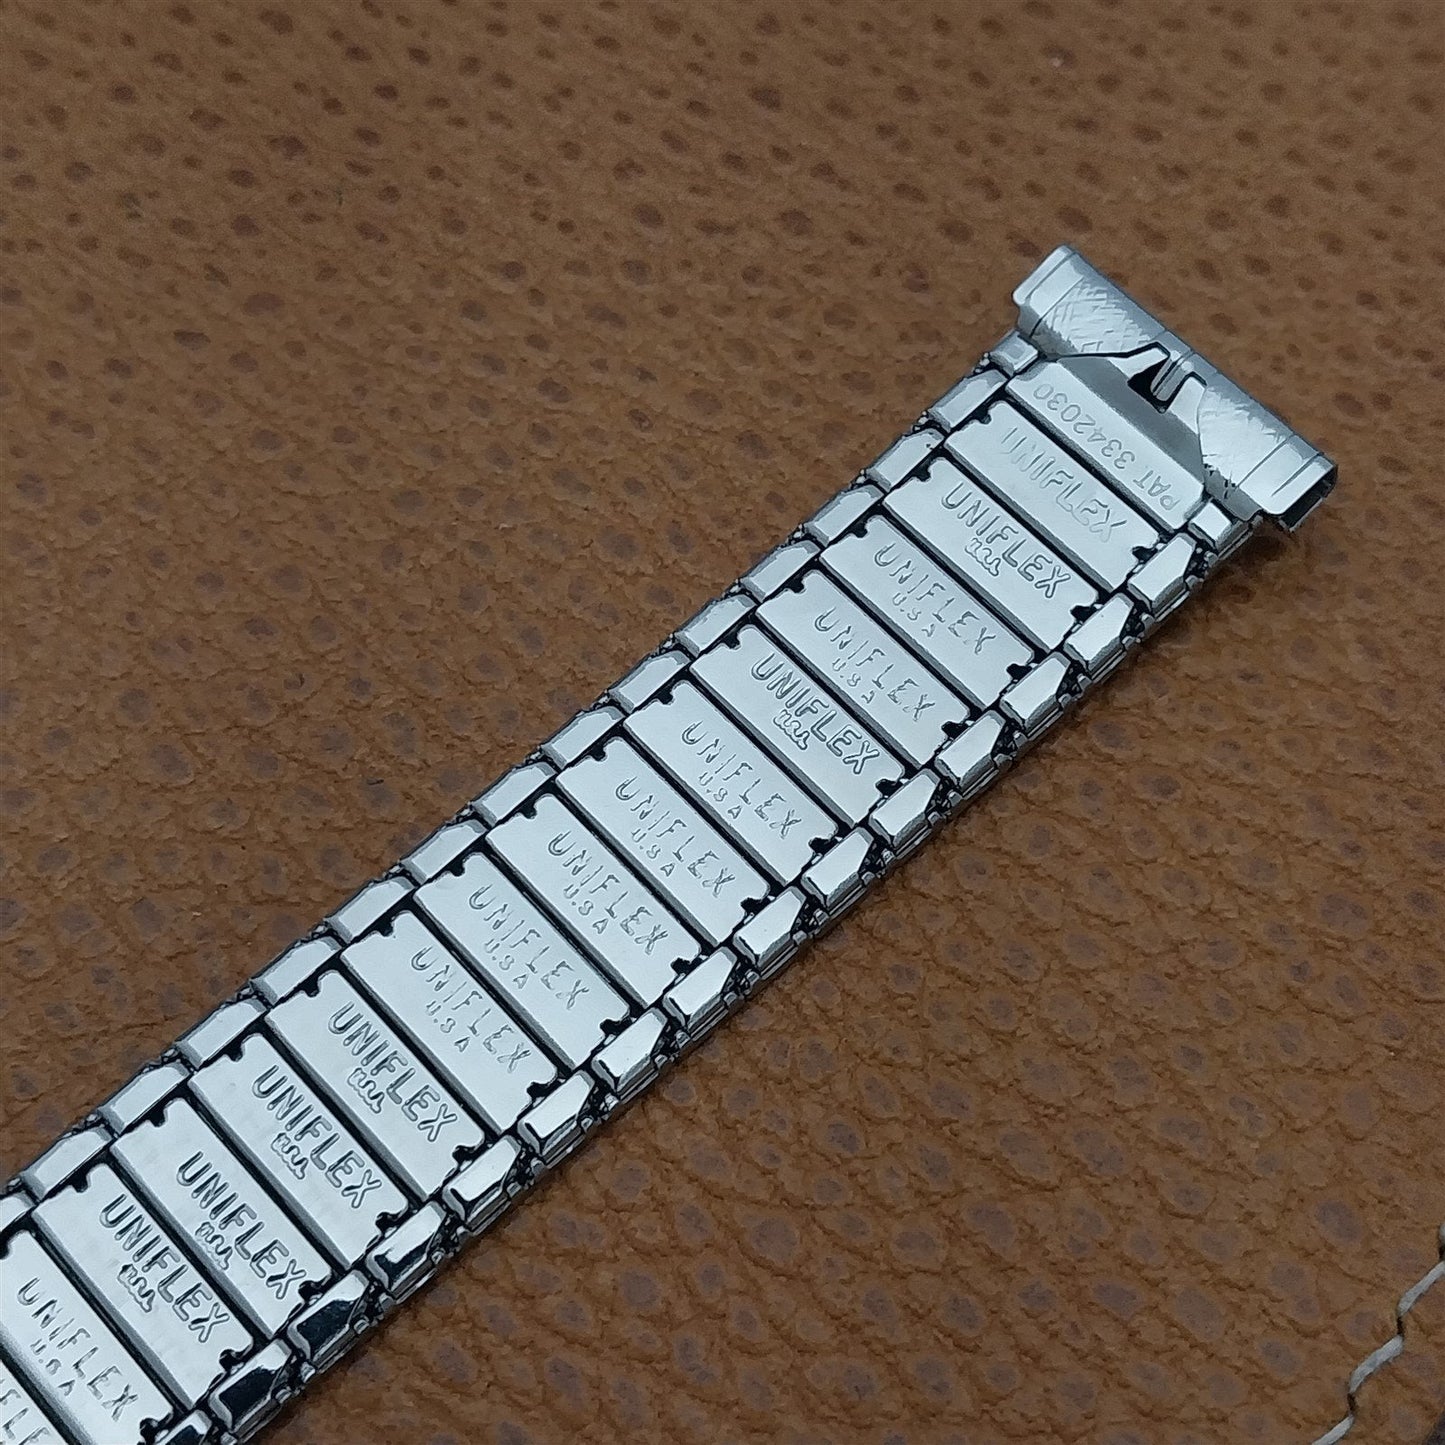 17.2mm 17mm Stainless Uniflex Slim Expansion Unused 1960s Vintage Watch Band